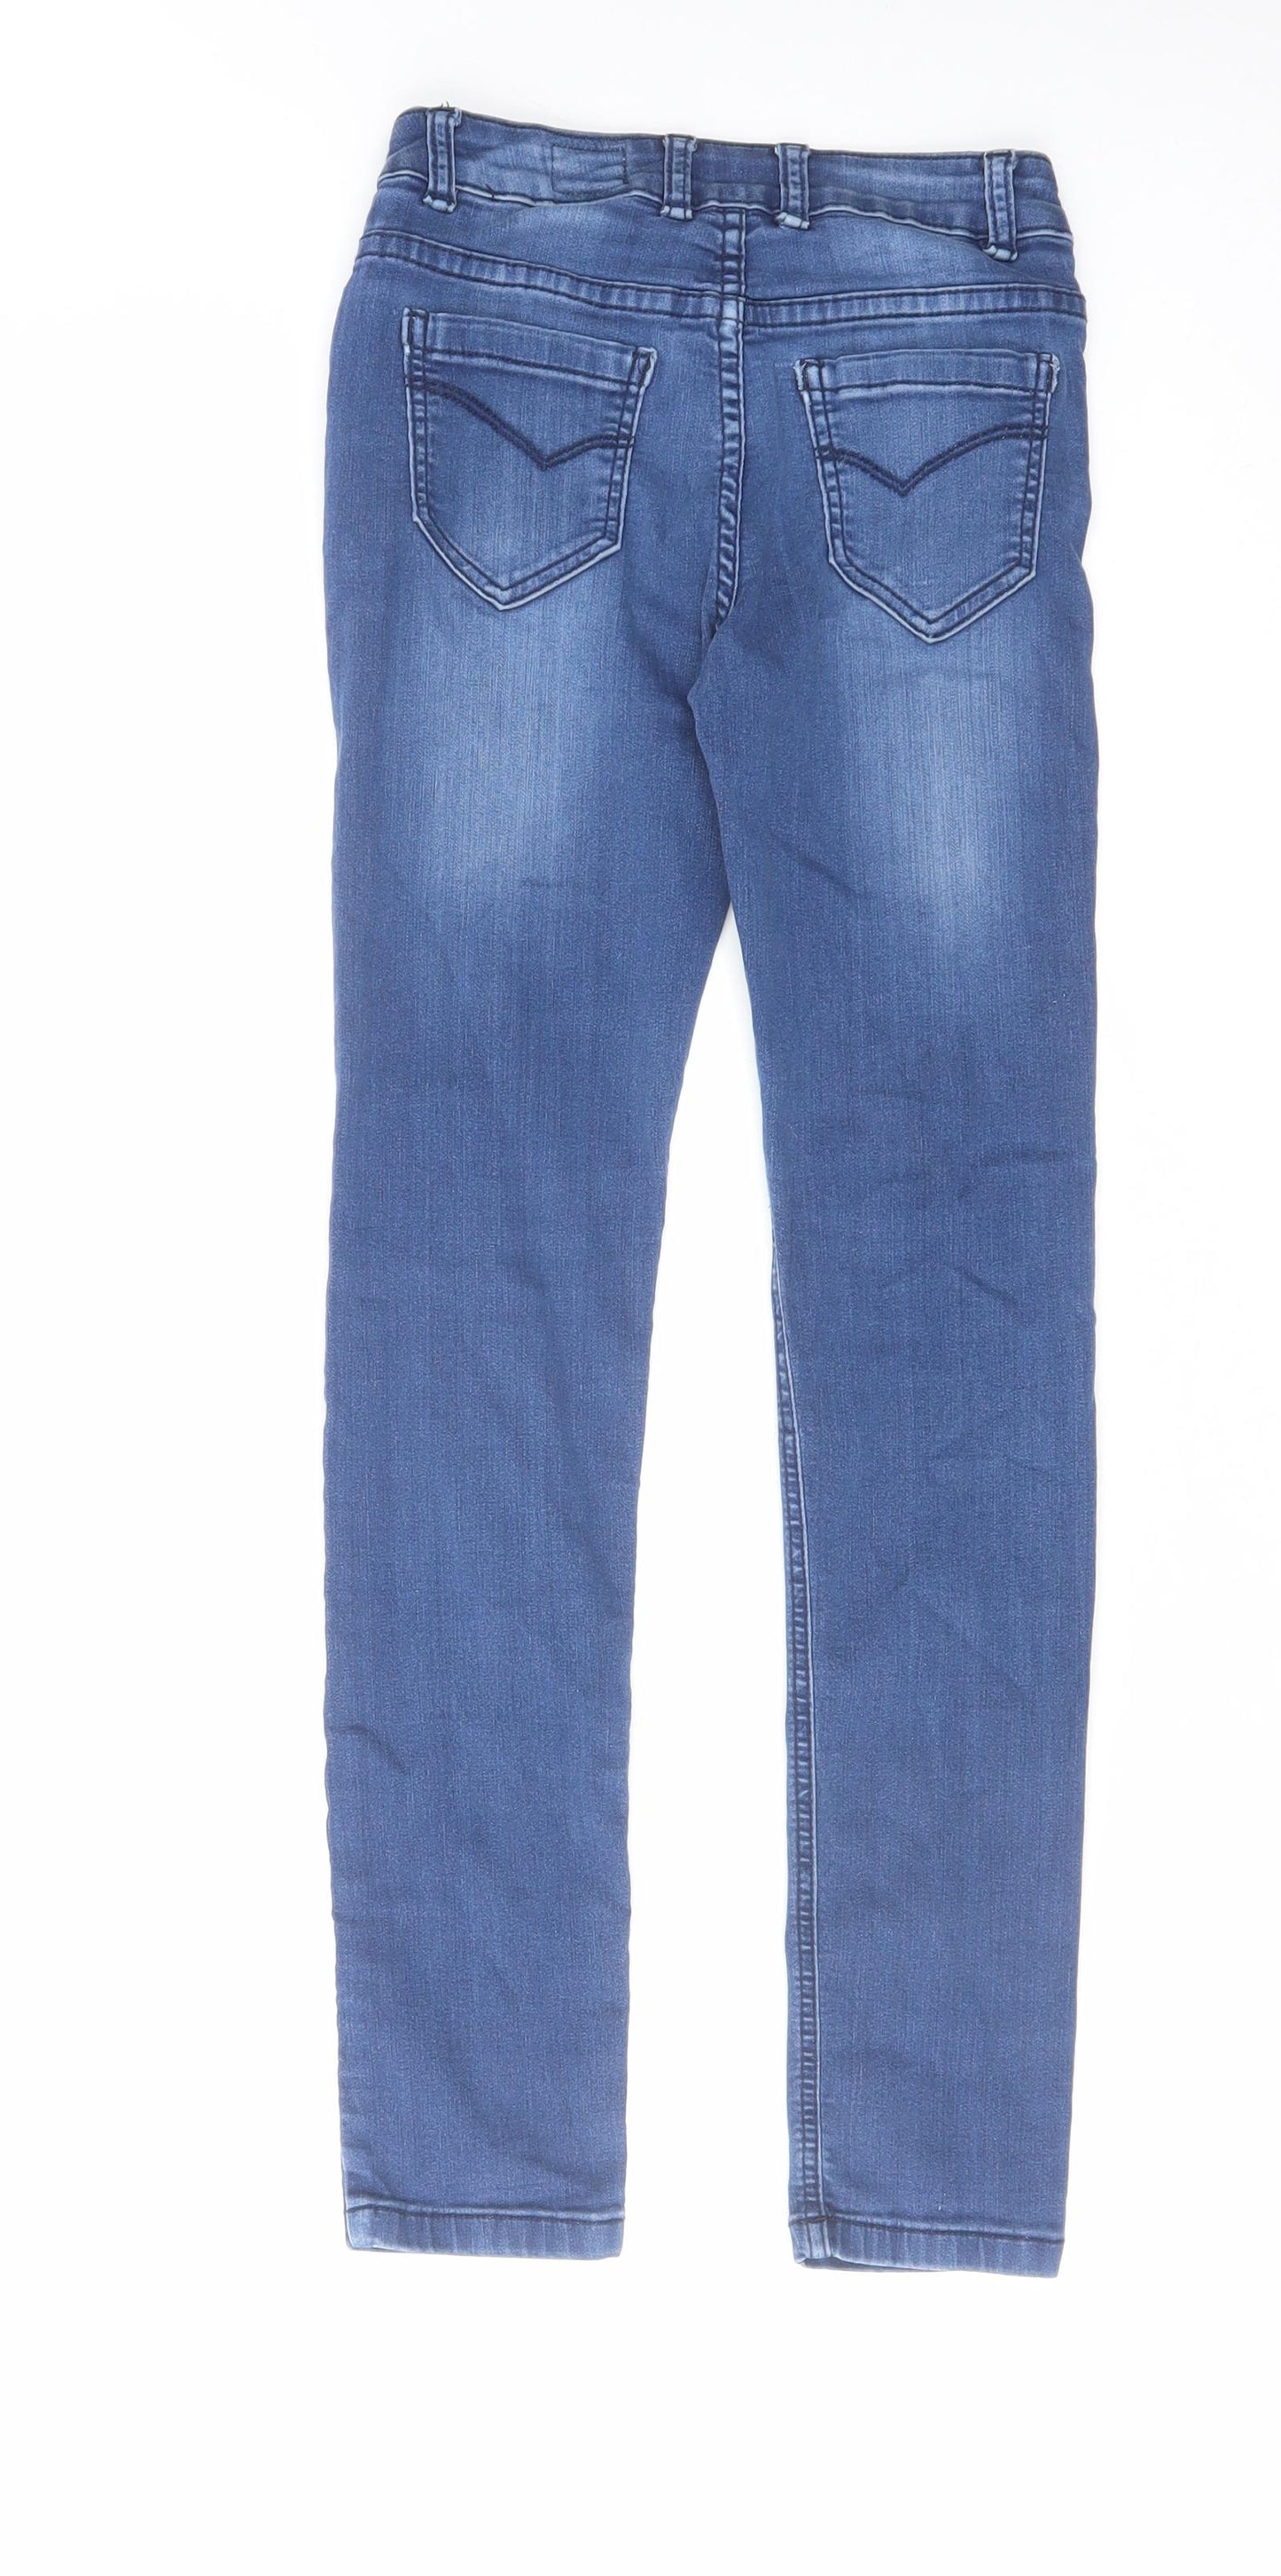 Johnnie B Womens Blue Cotton Skinny Jeans Size 24 in L25 in Regular Zip